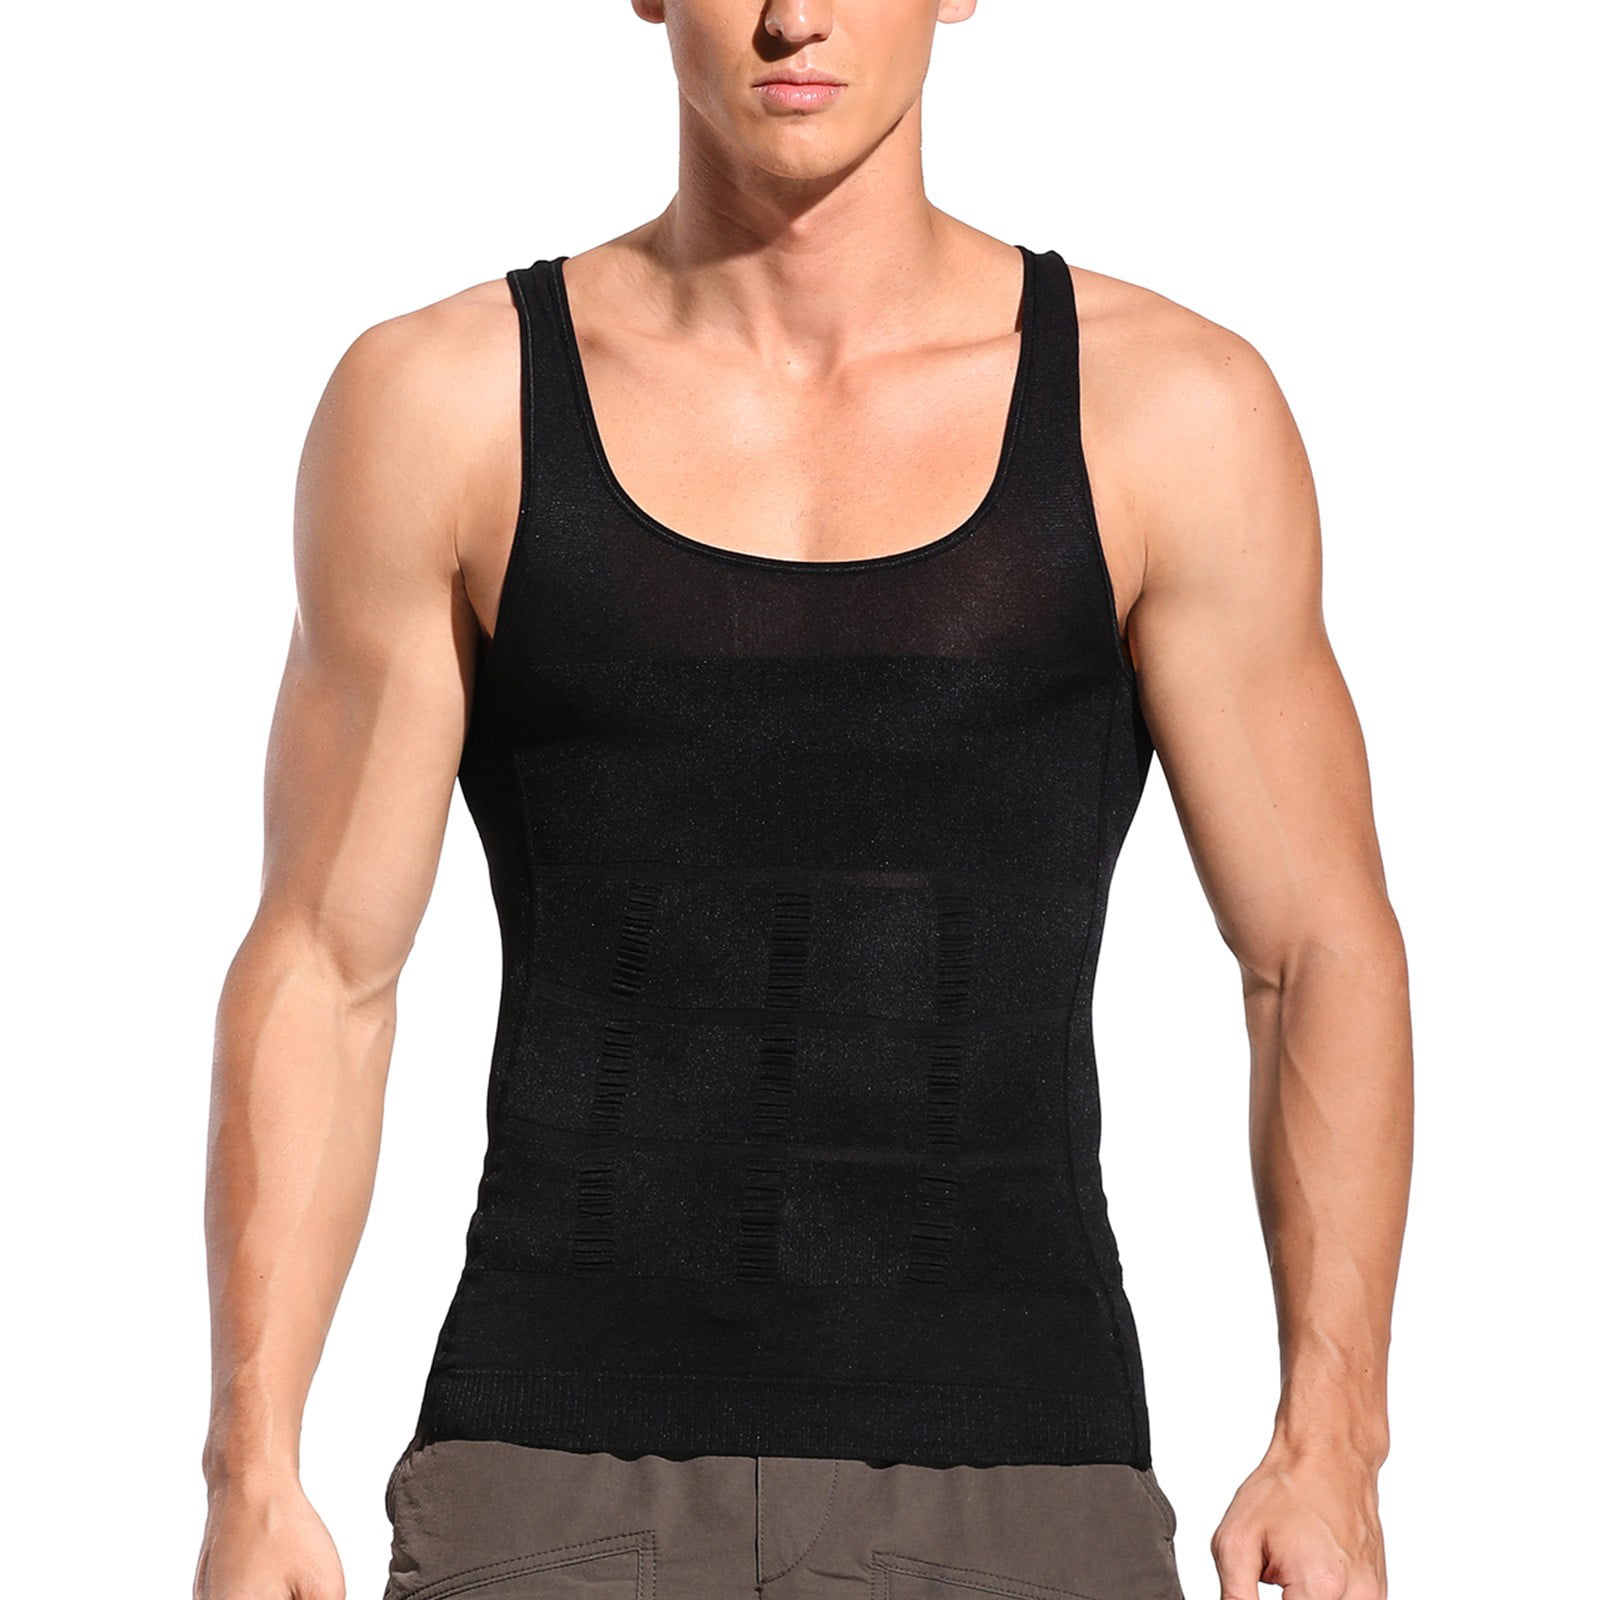 Skin 'Up Men Tank-Top t-shirt perder peso fitness Shaper Slimming infrarrojos High-Tech 